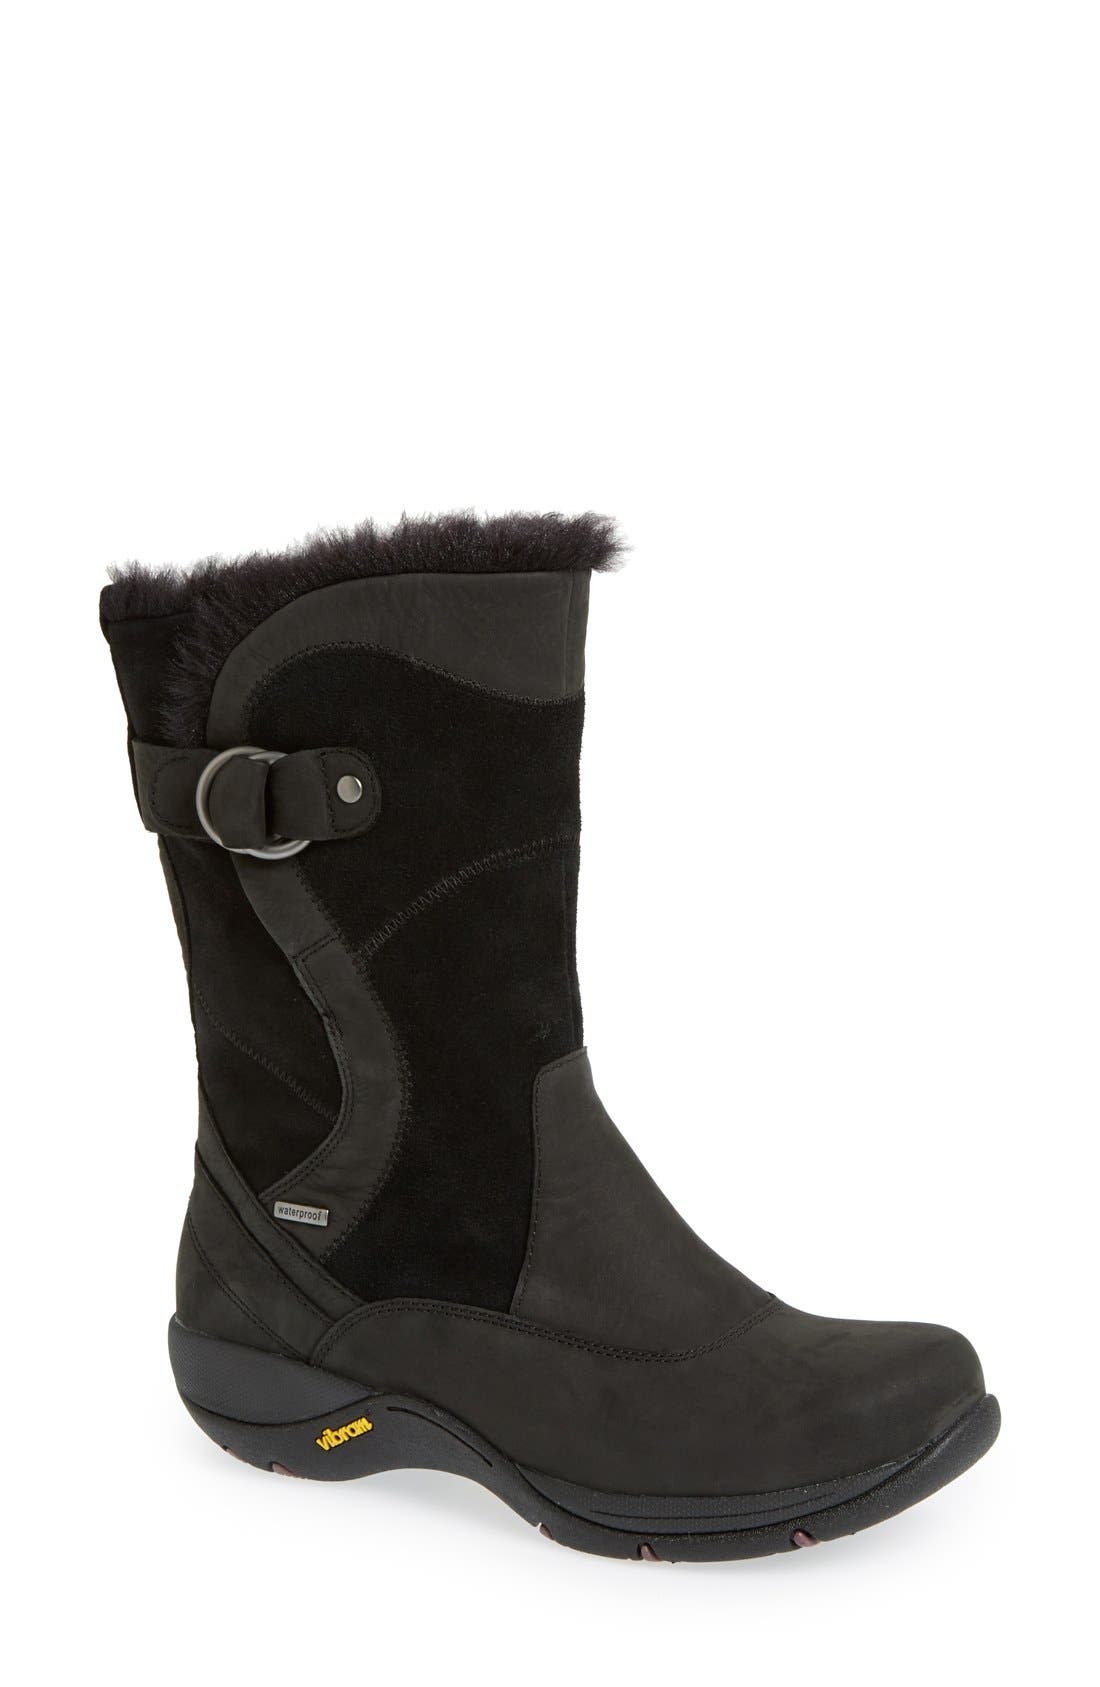 dansko snow boots